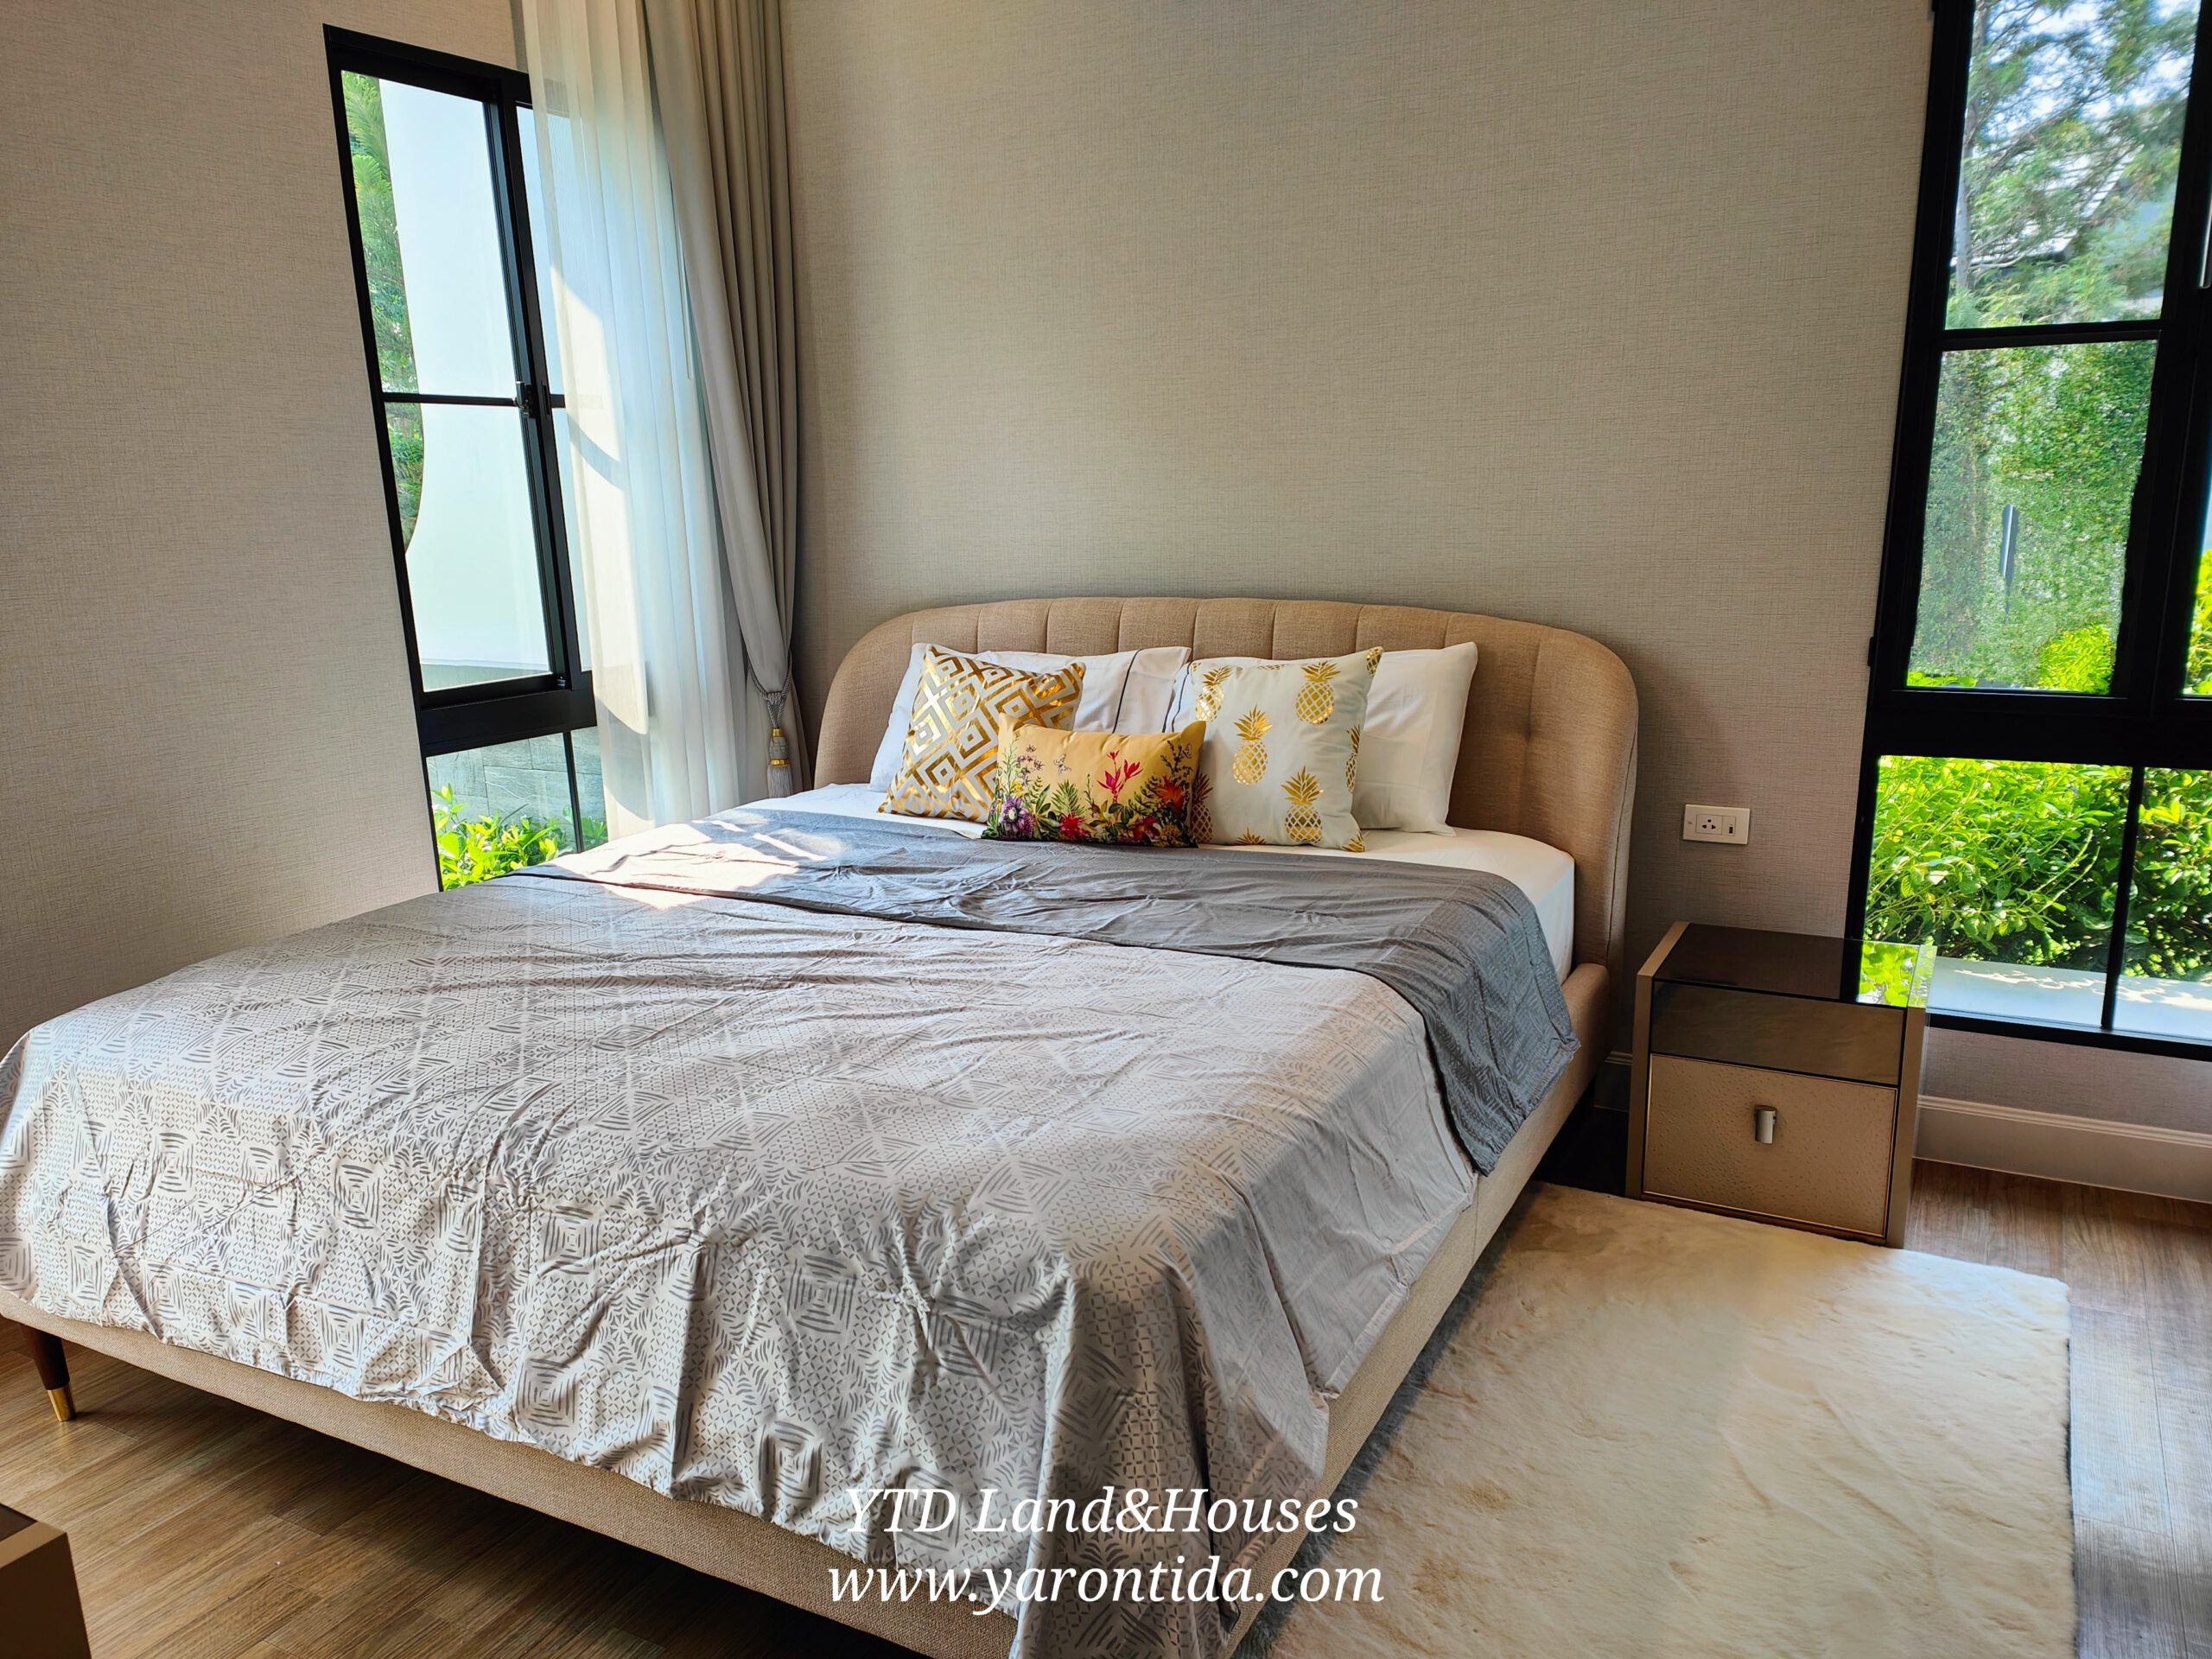 Luxury House for Rent Nantawan 2 Rama 9 Krungthepkreetha ให้เช่าบ้านหรู นันทวัน 2 พระราม 9 กรุงเทพกรีฑา THB 450k/month